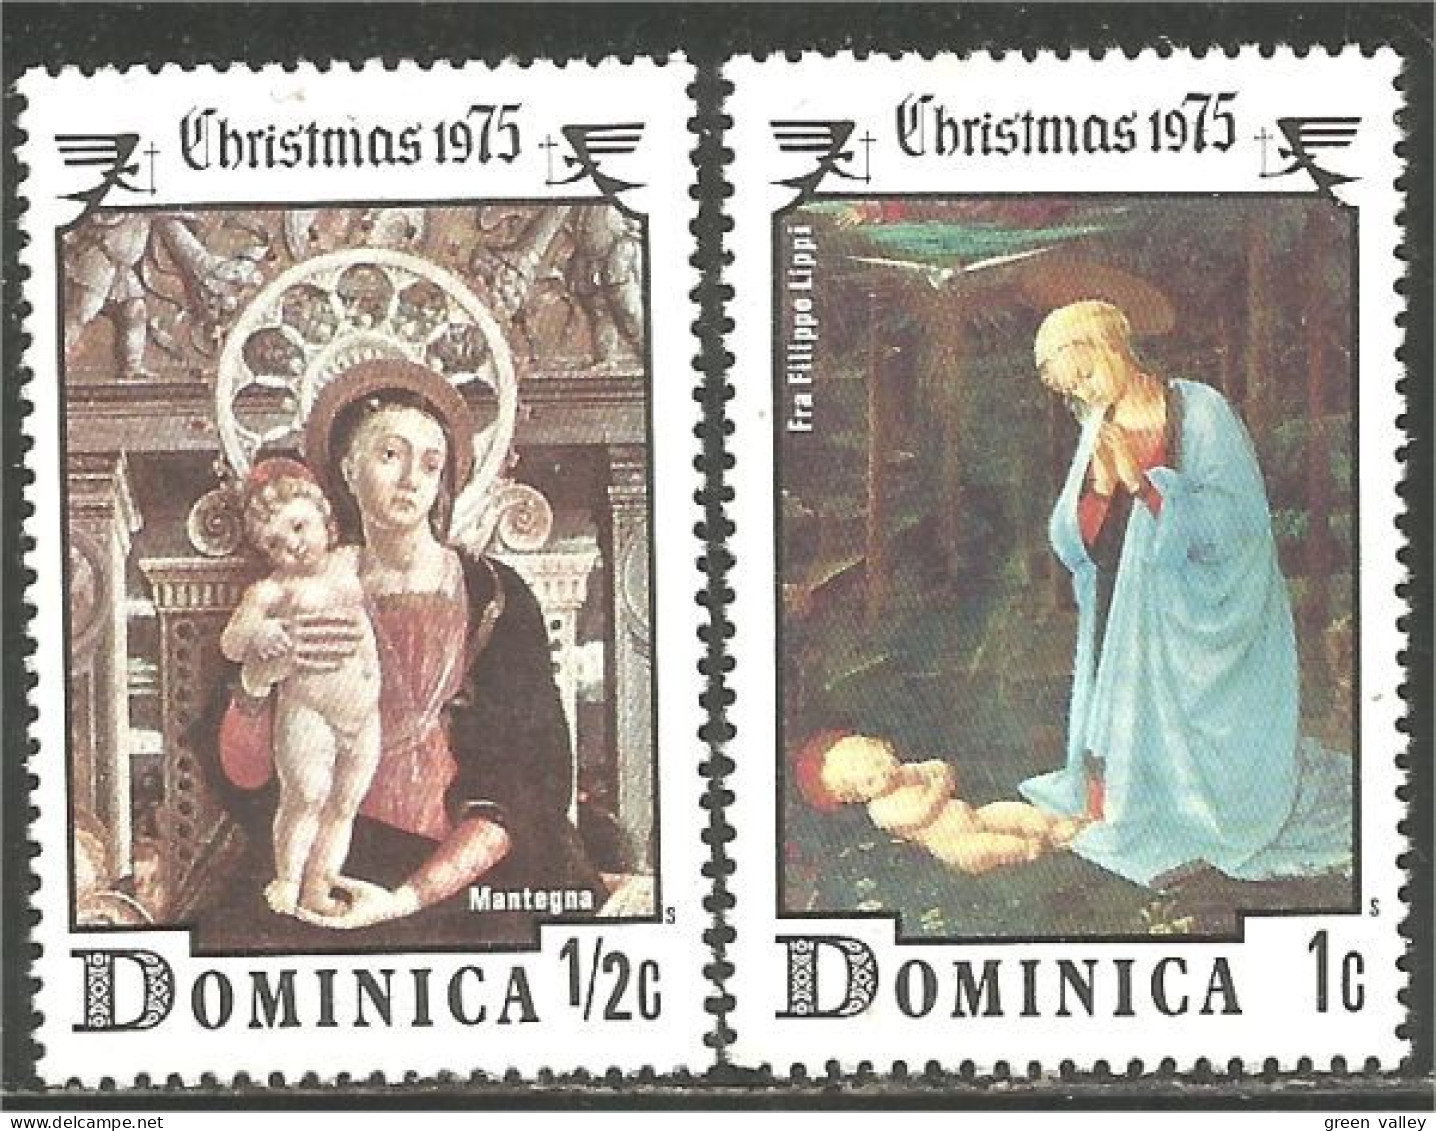 NO-3 Dominica Noel Christmas 1975 Natale Navidad Kerstmis Weihnachten Natal MNH ** Neuf SC - Christmas